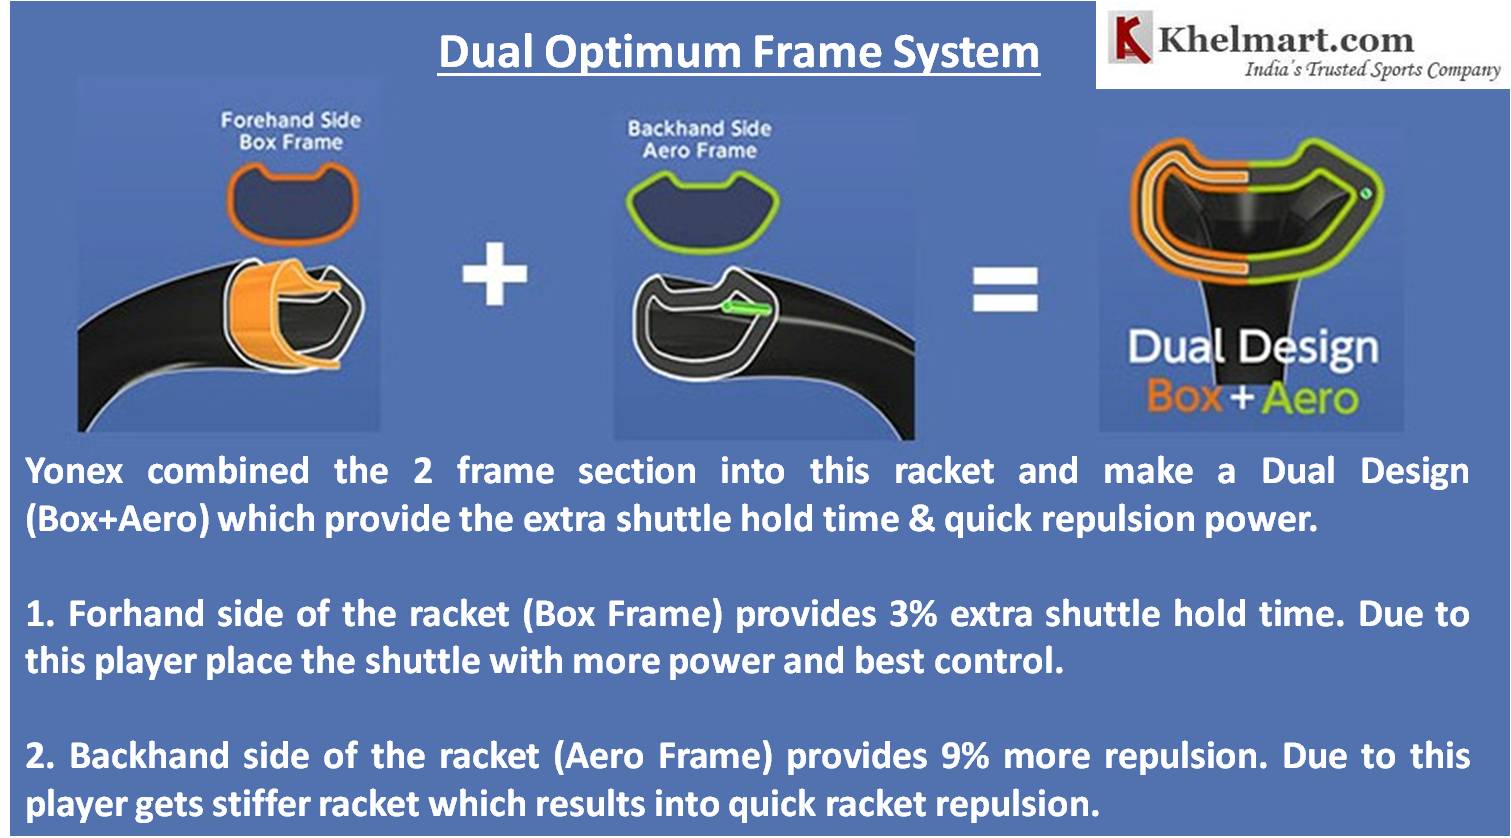 Duora_10_Badminton_Racket_Optimum_Frame_System_Khelmart